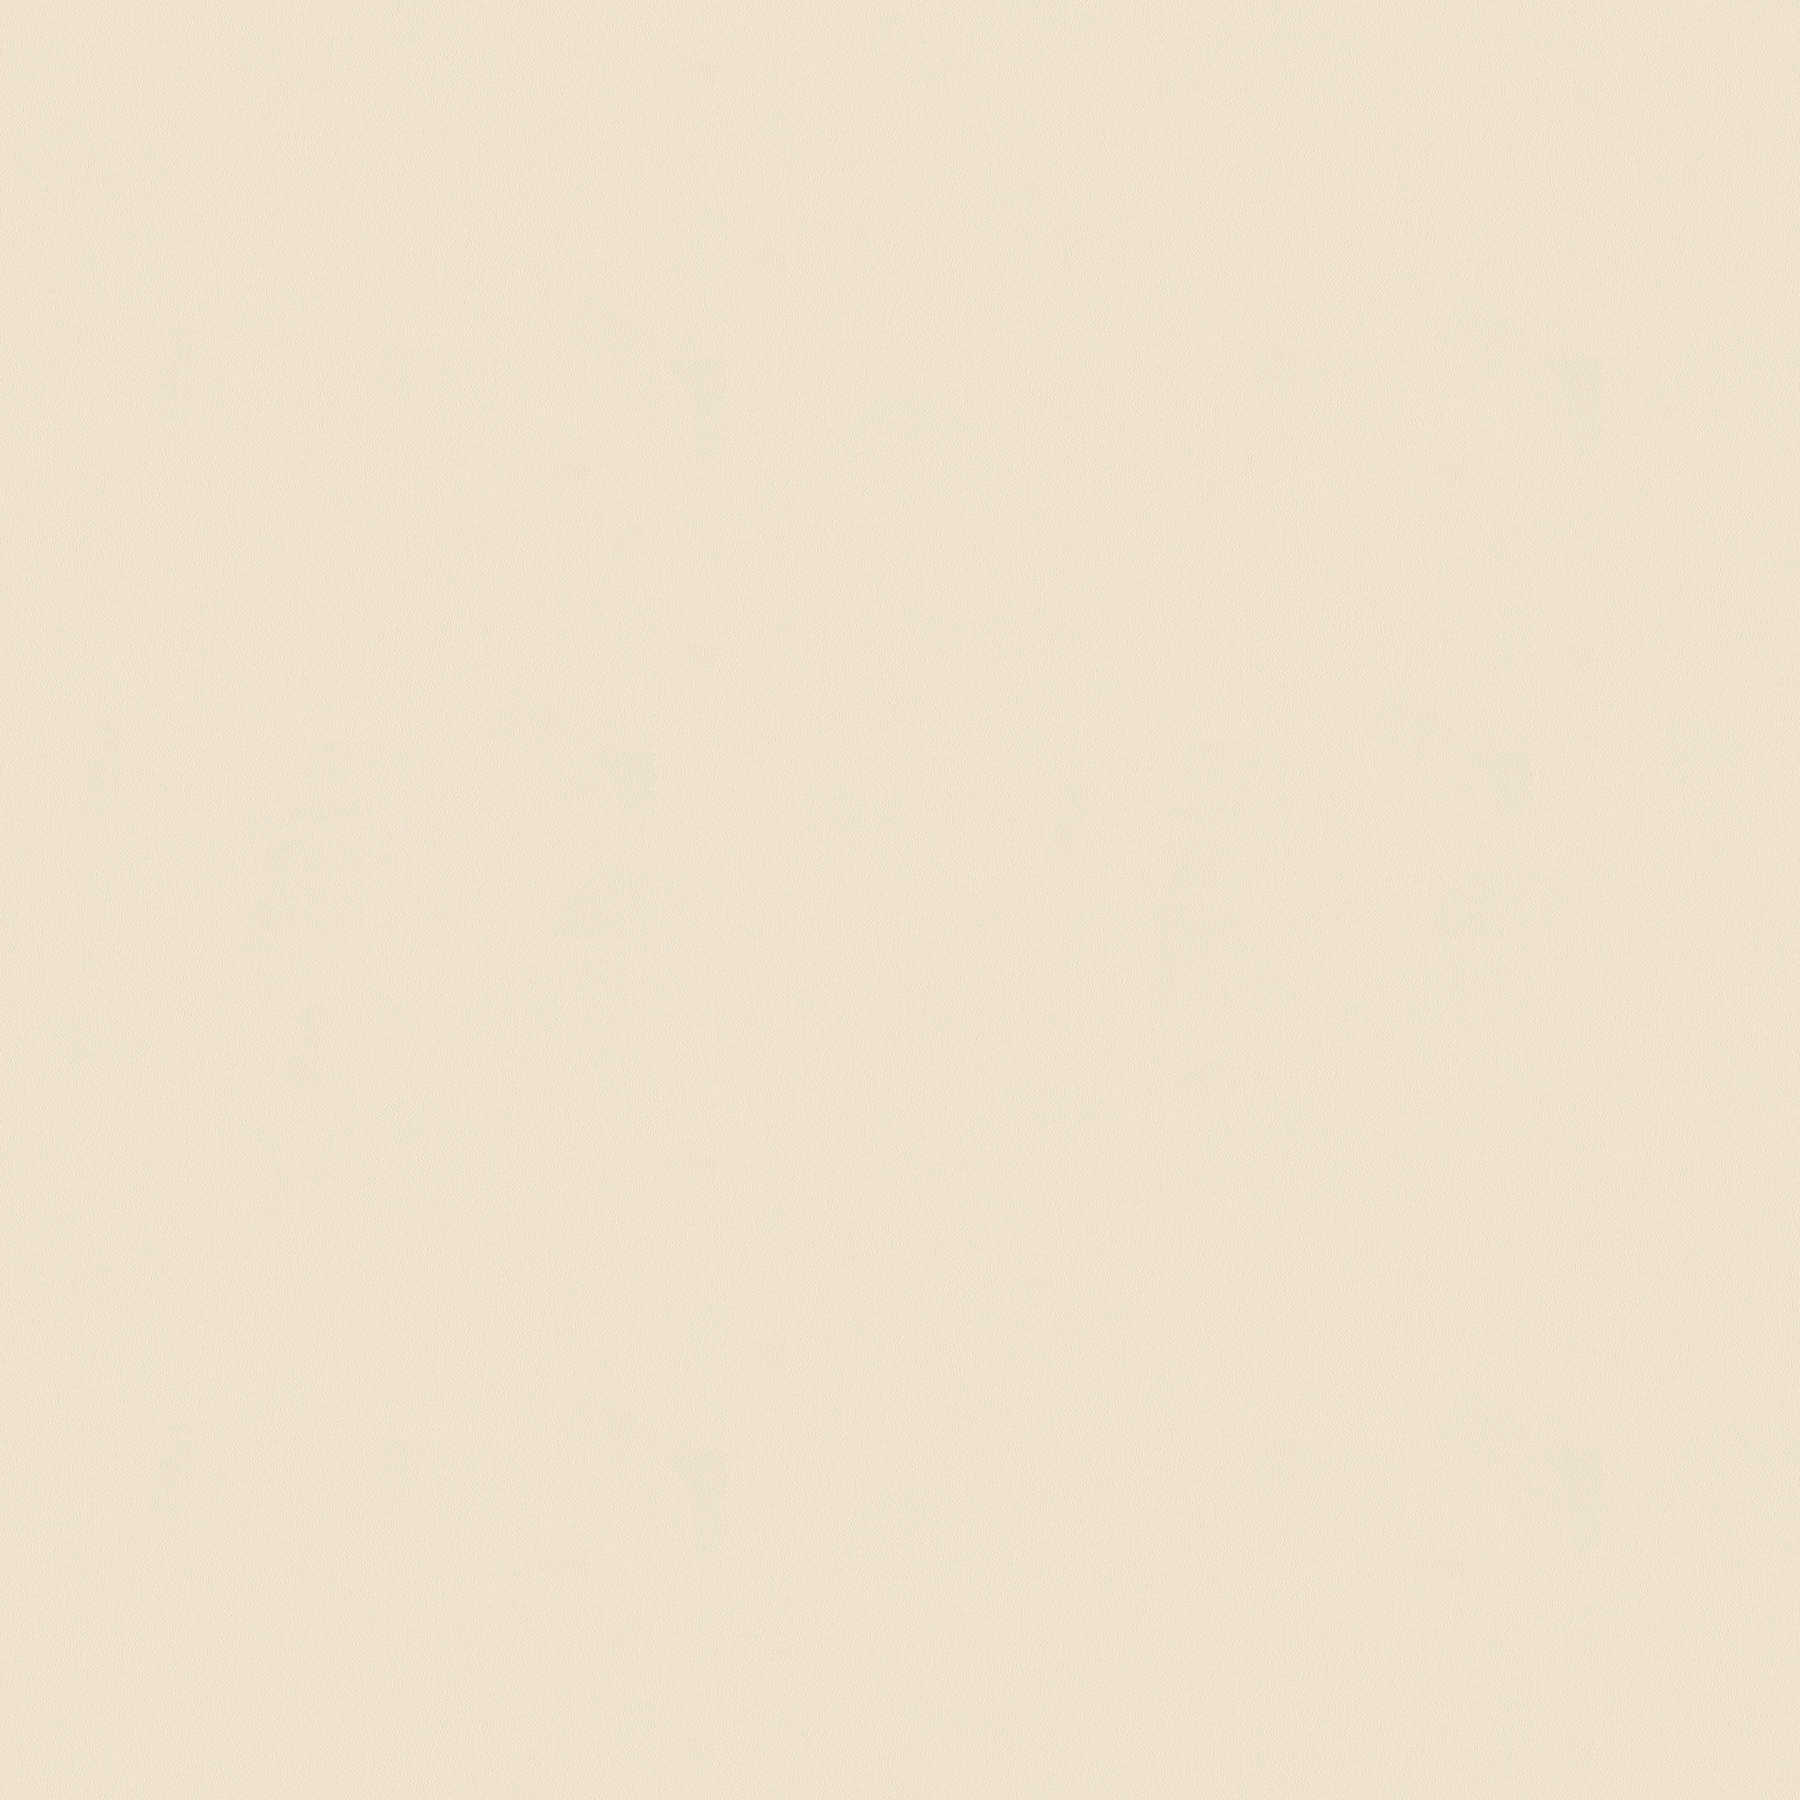         Luxury wallpaper plain & matt - beige
    